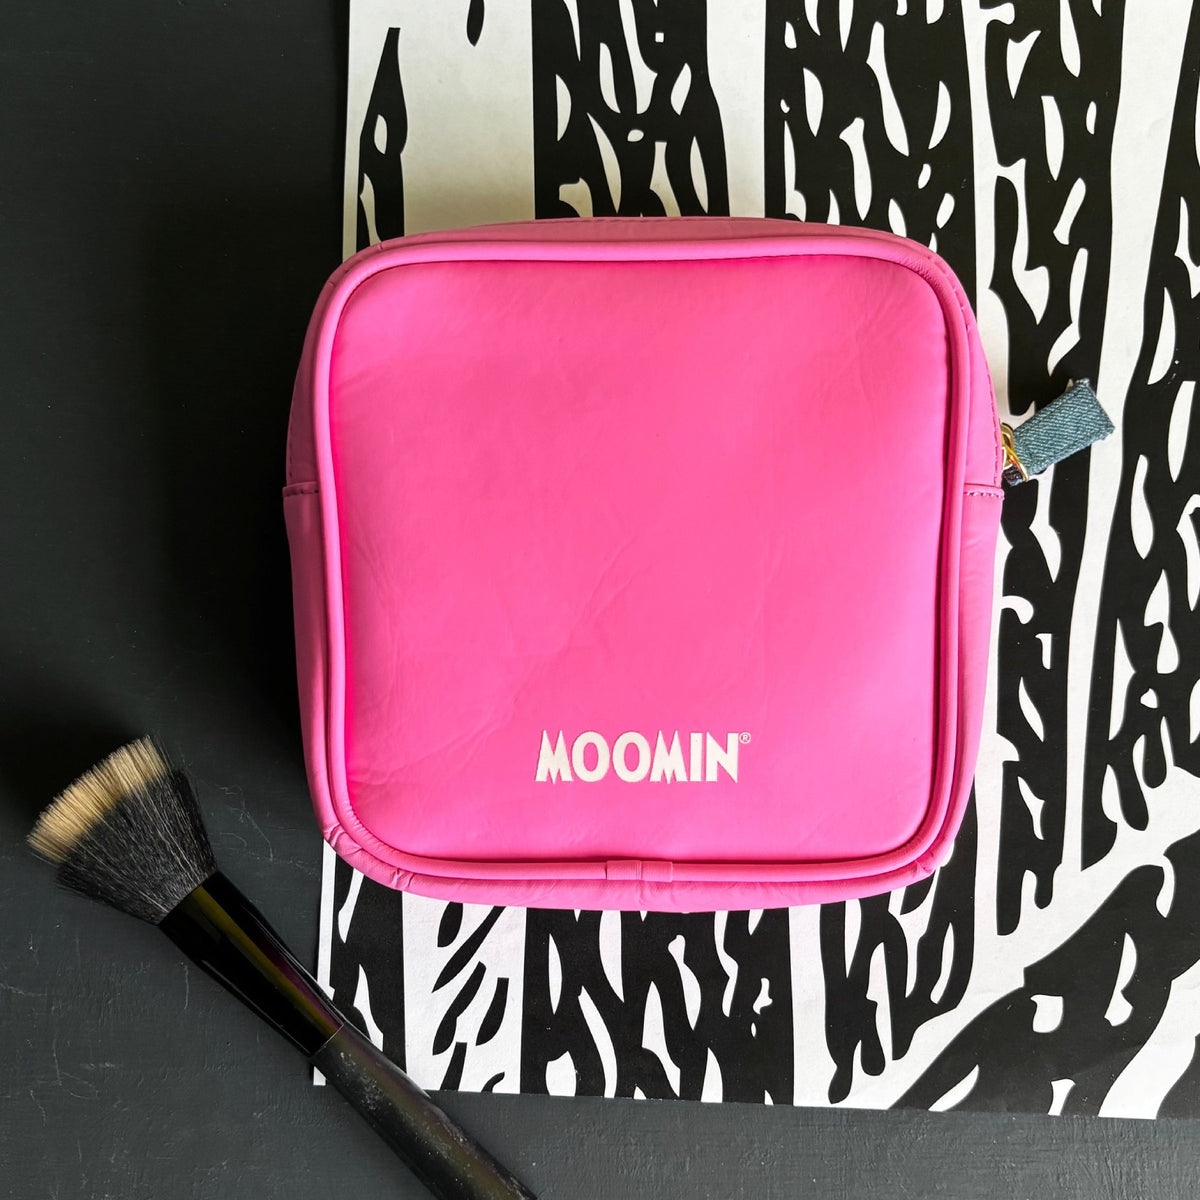 Moomin Makeup Bag Beautiful